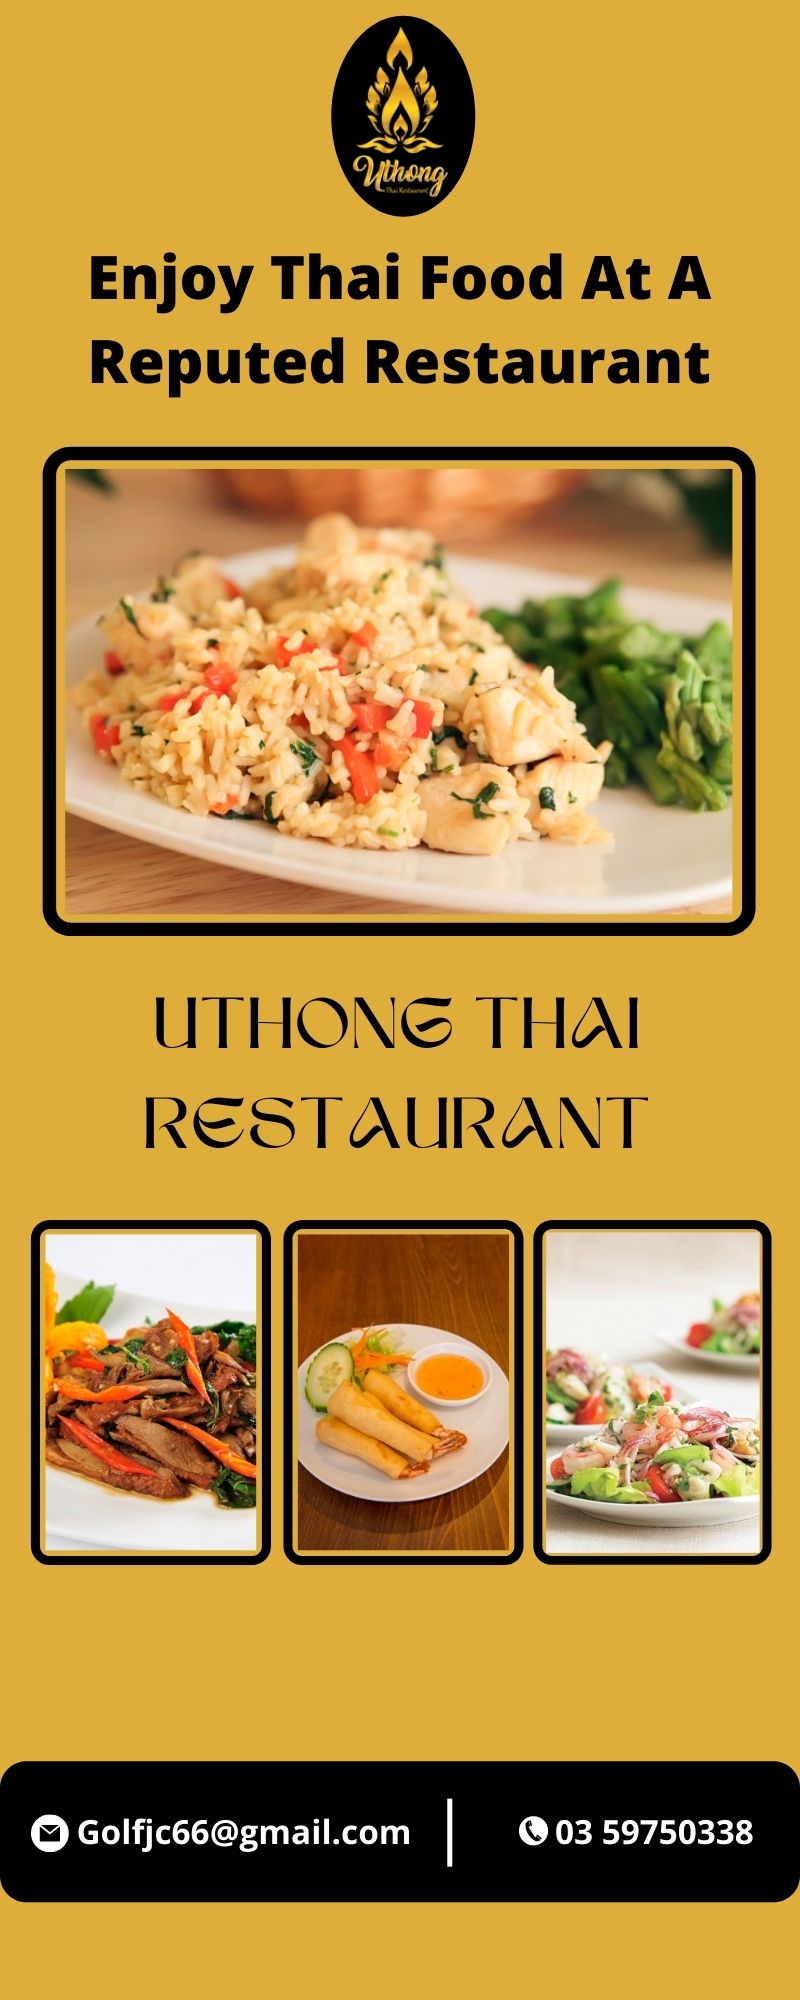 Thai Food Restaurant In Mornington